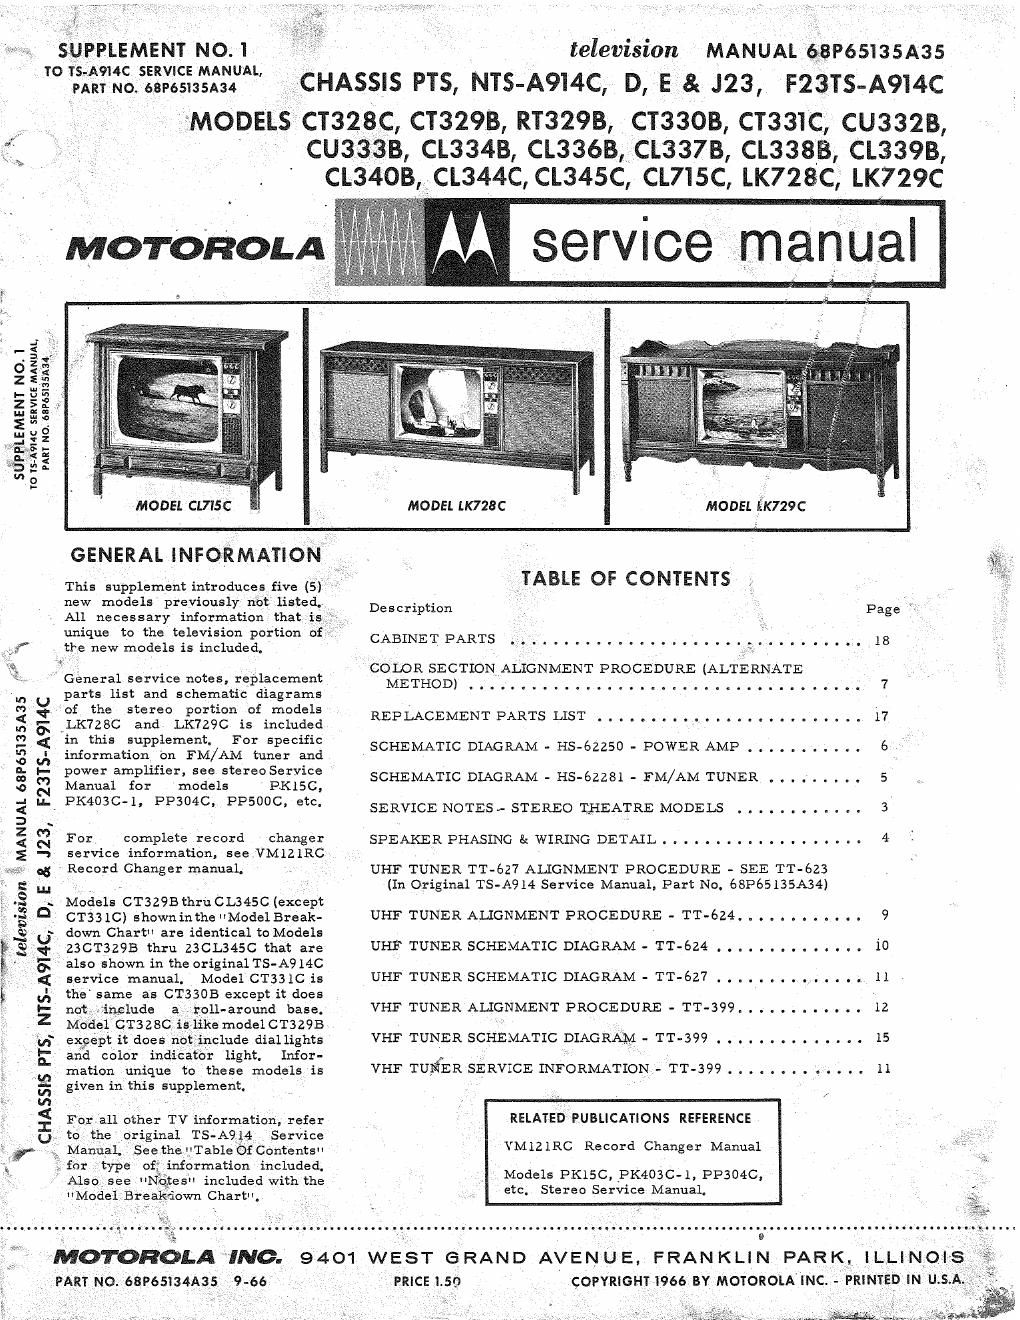 motorola cl 345 c service manual